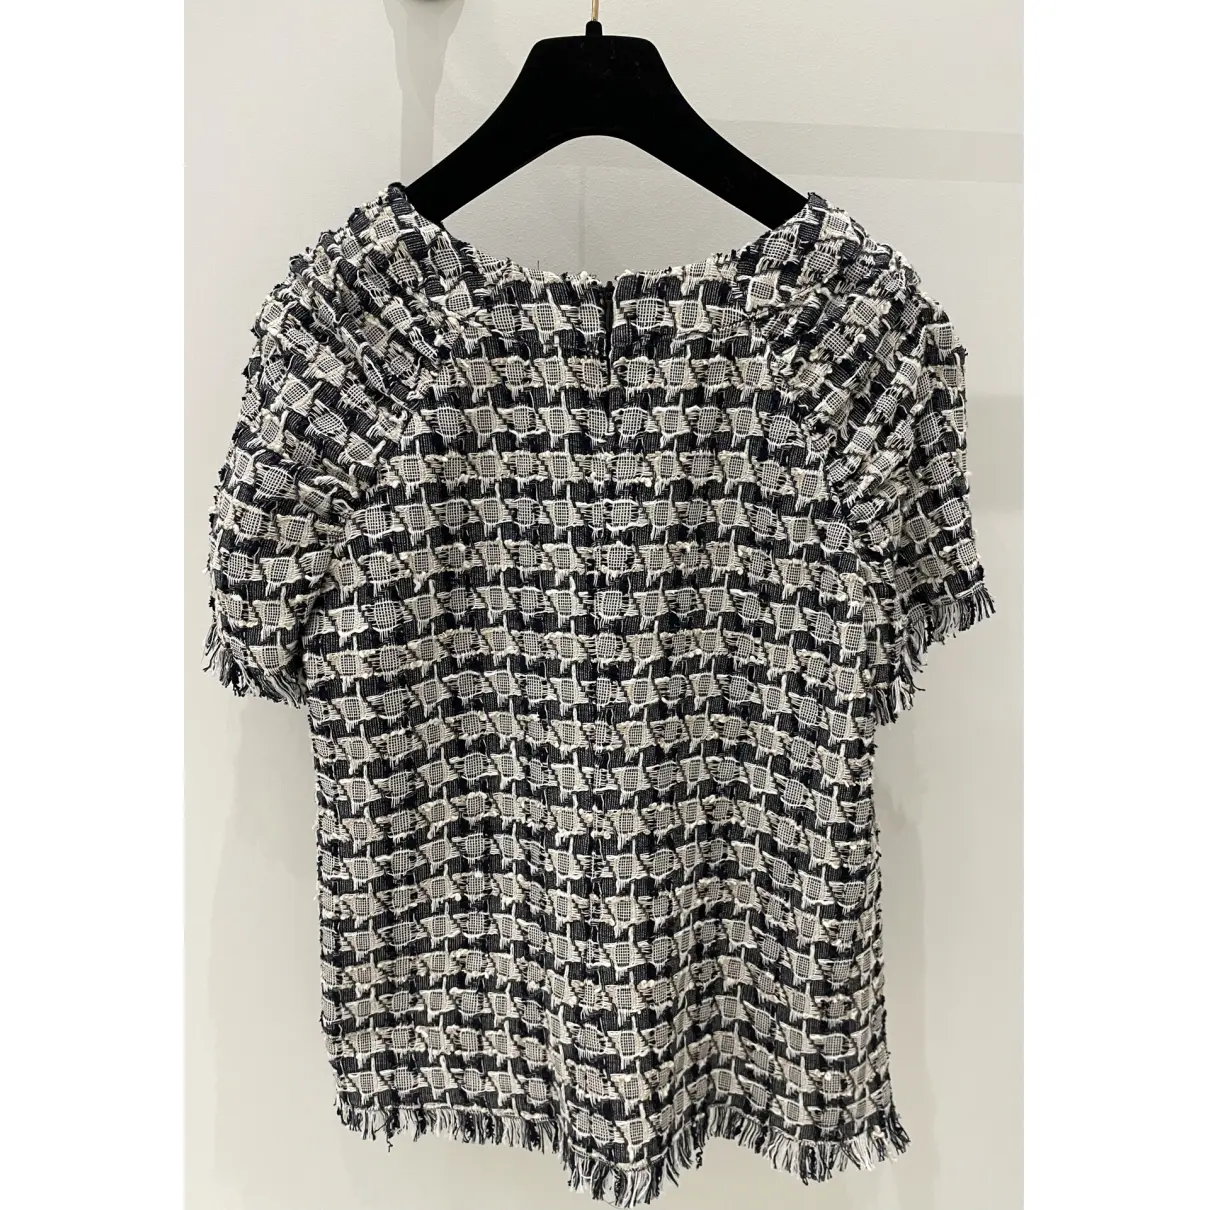 Buy Chanel Tweed shirt online